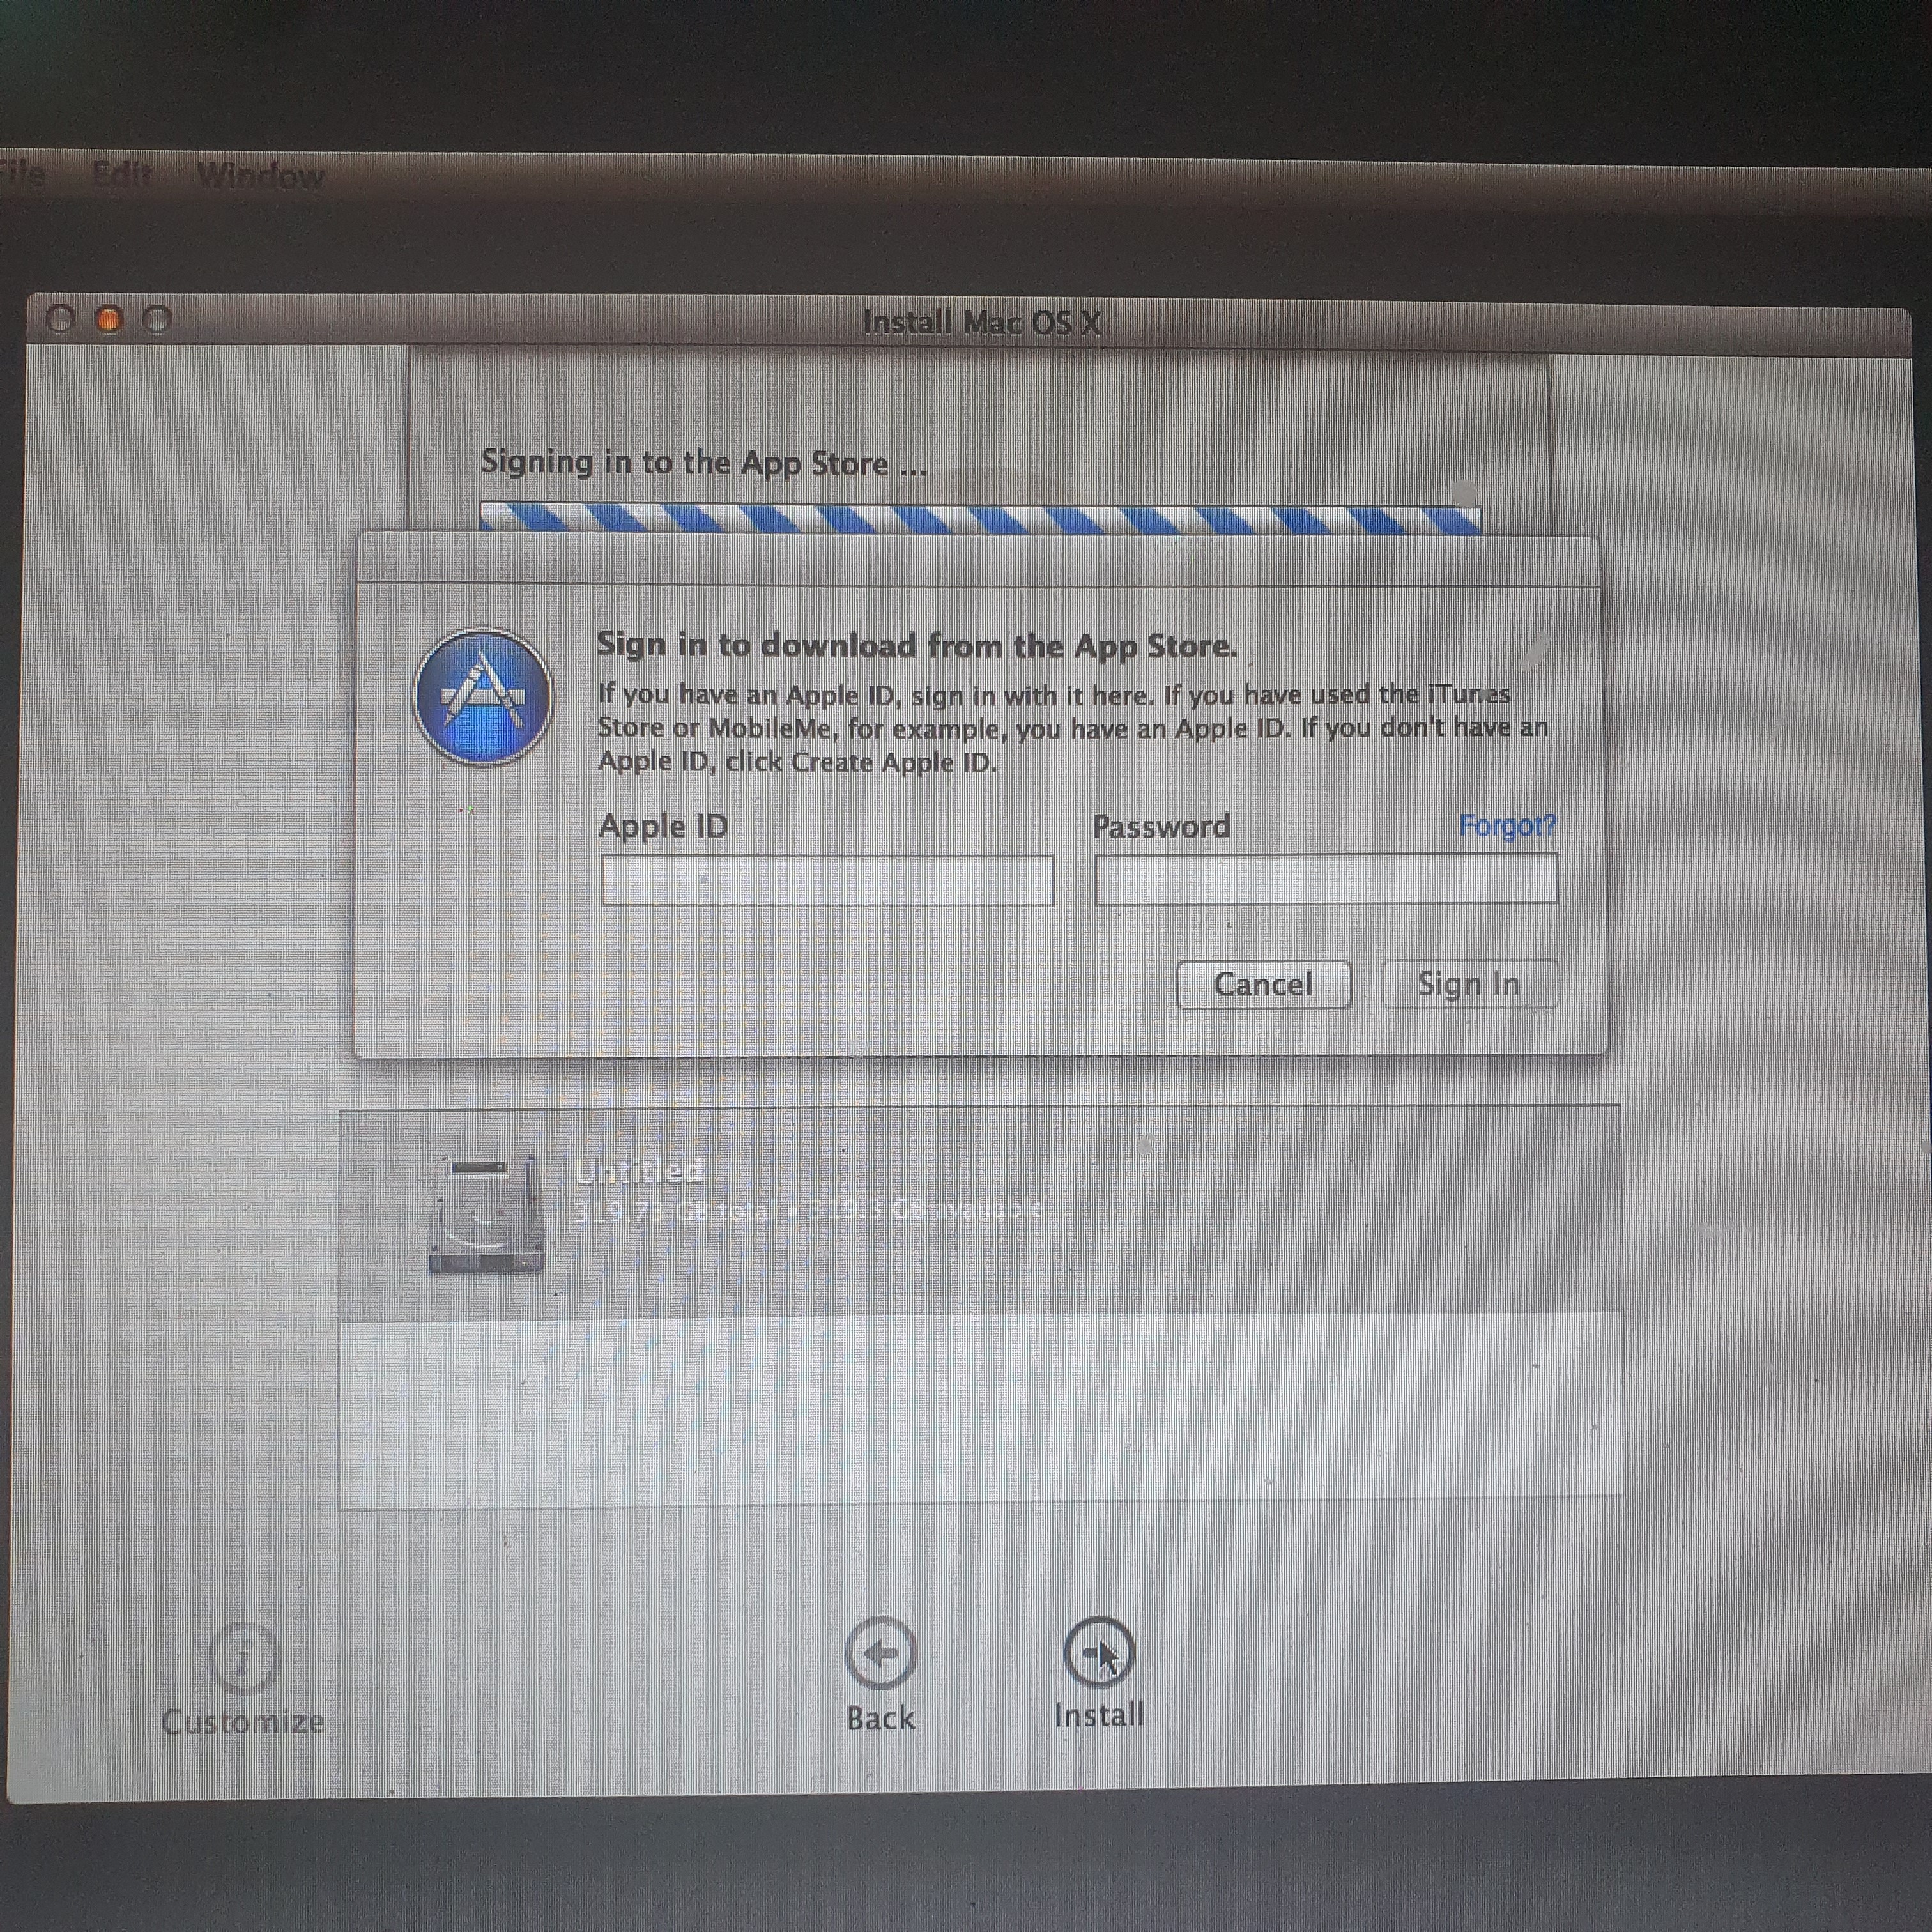 MacBook pro Reset (Mac OS X v10.7 Lion) - Apple Community